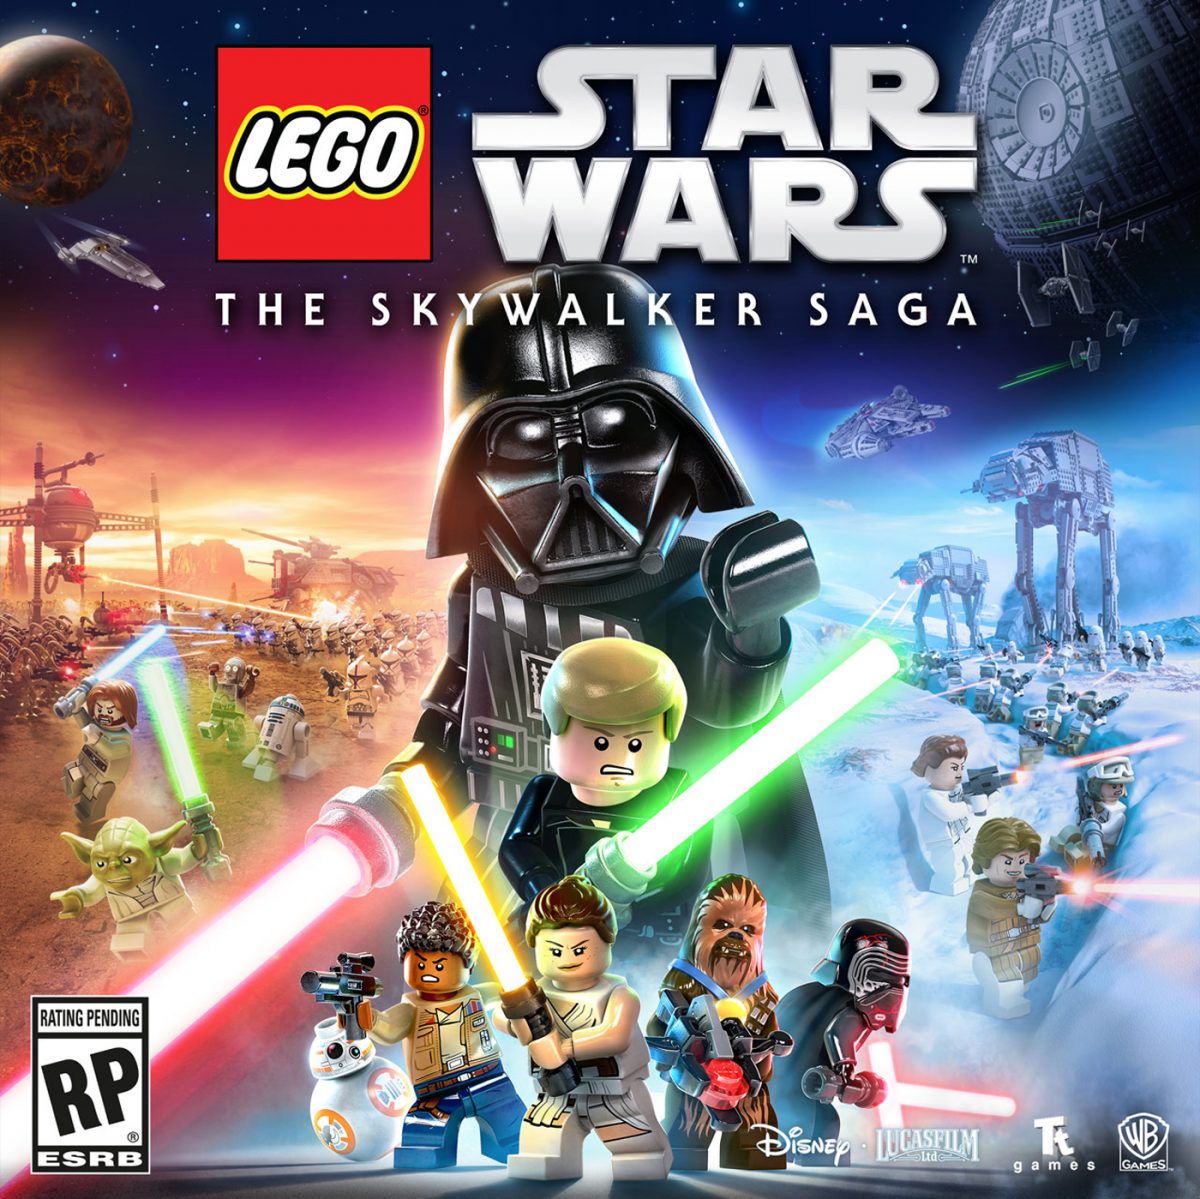 UK Game Retailer Doing Early Preorder Fulfillment of “LEGO Star Wars: The Skywalker Saga”?